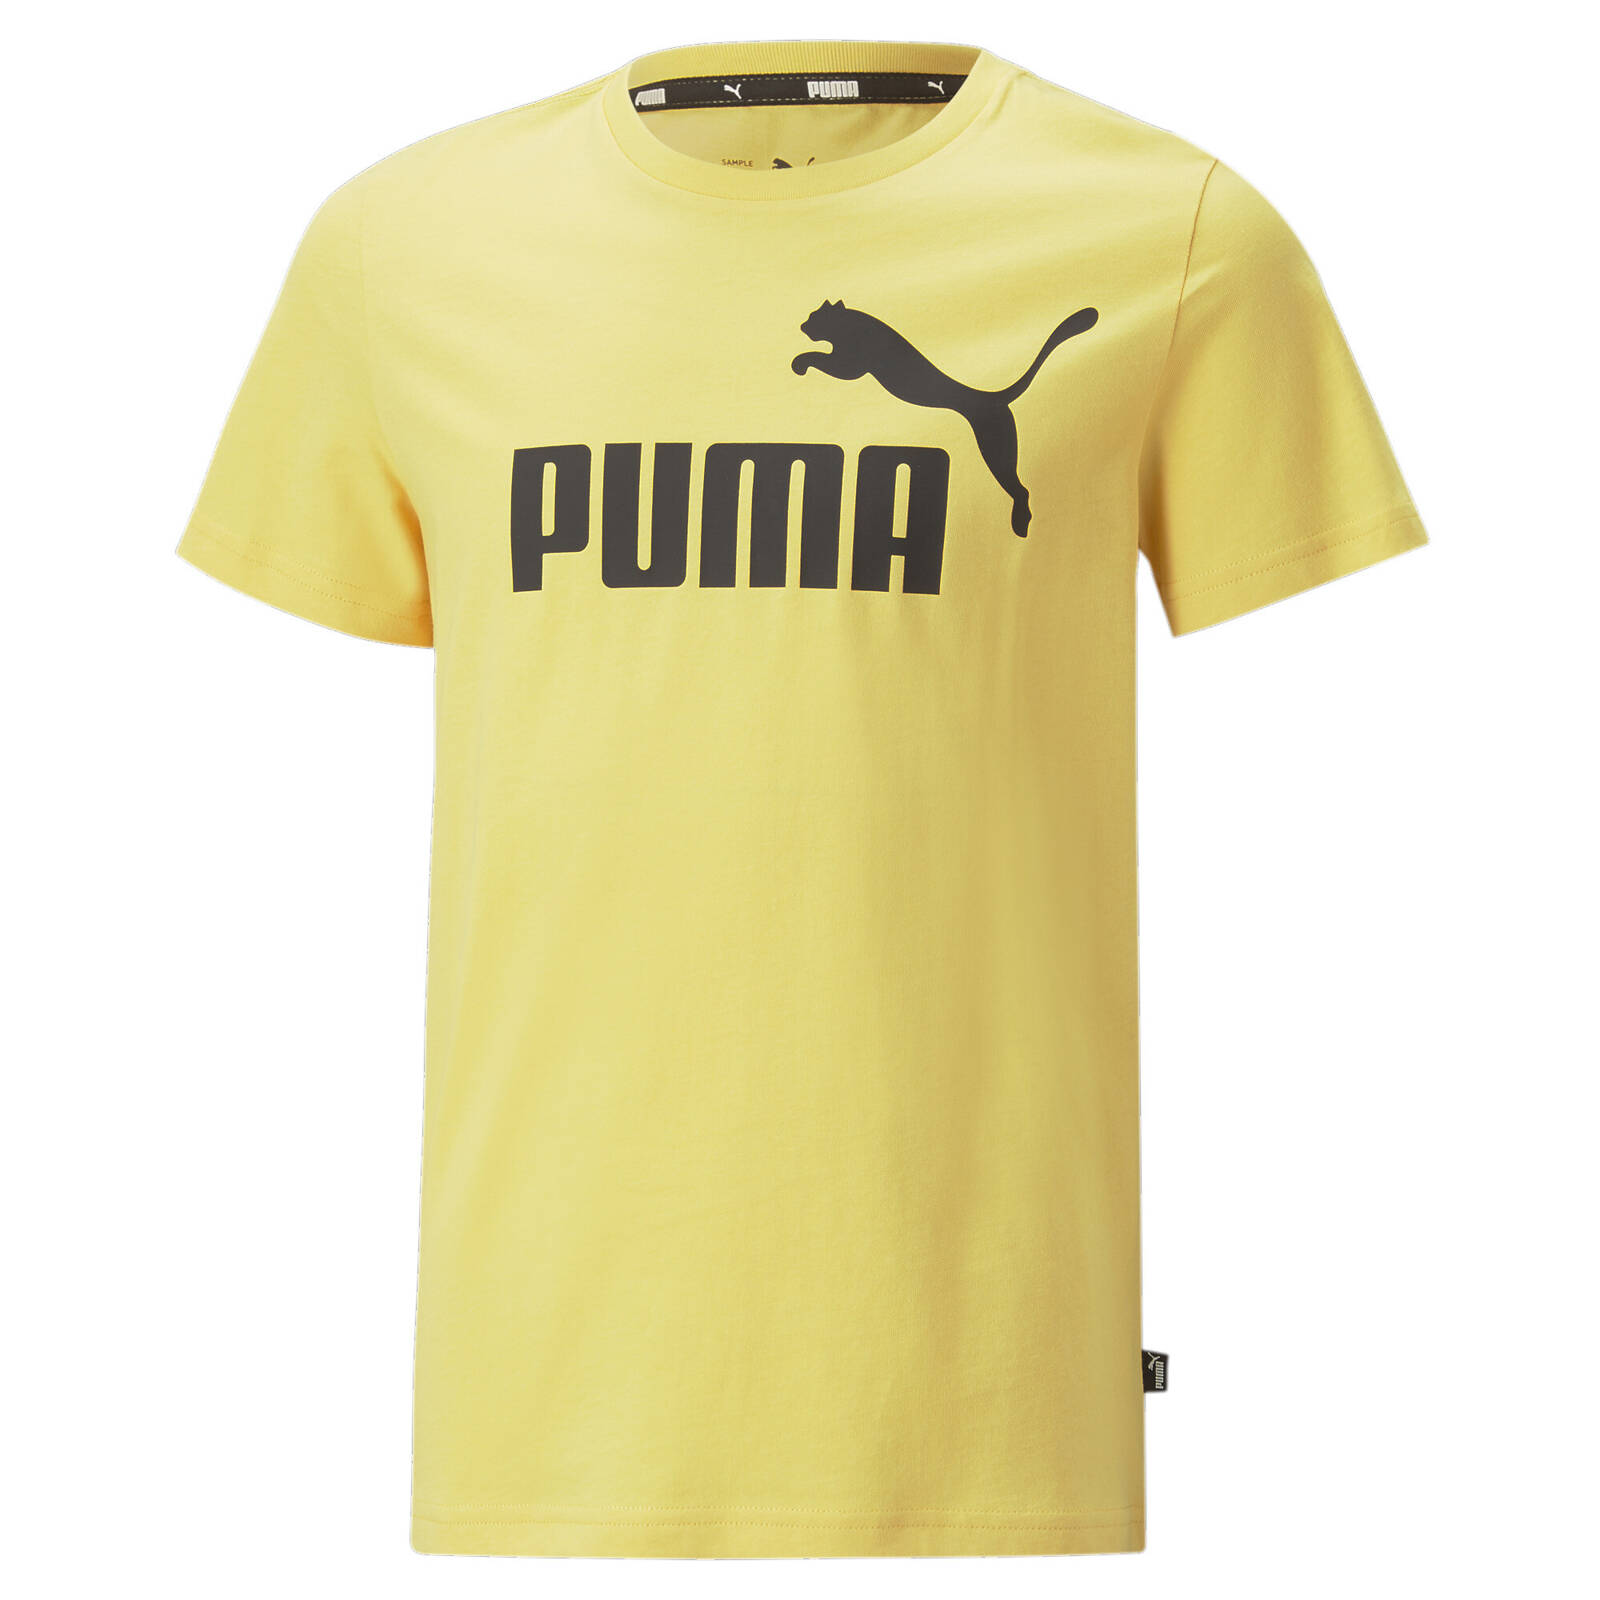 Koszulka chłopięca Puma ESS LOGO żółta 58696043